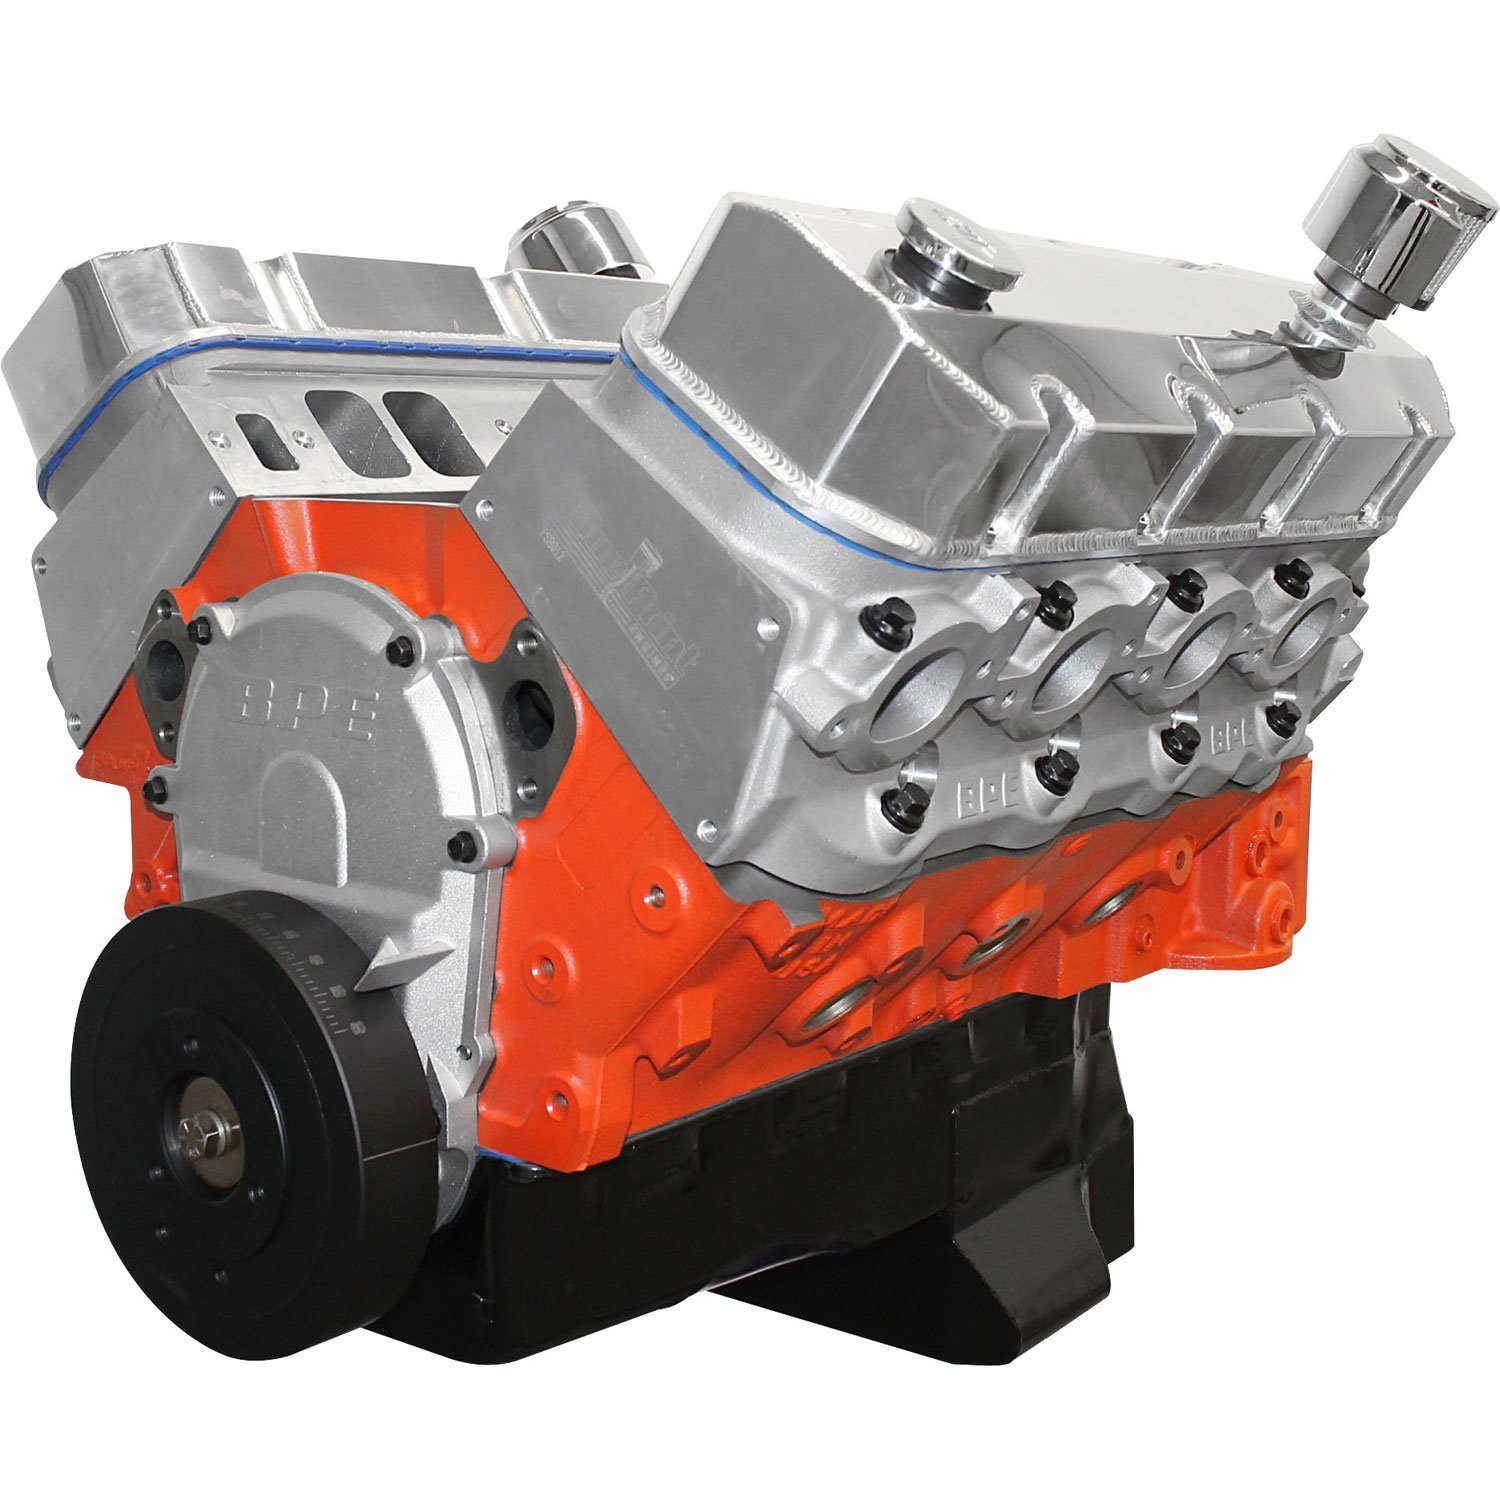 Blueprint Pro Series Big Block Chevy 540ci/600HP Power Adder Engine